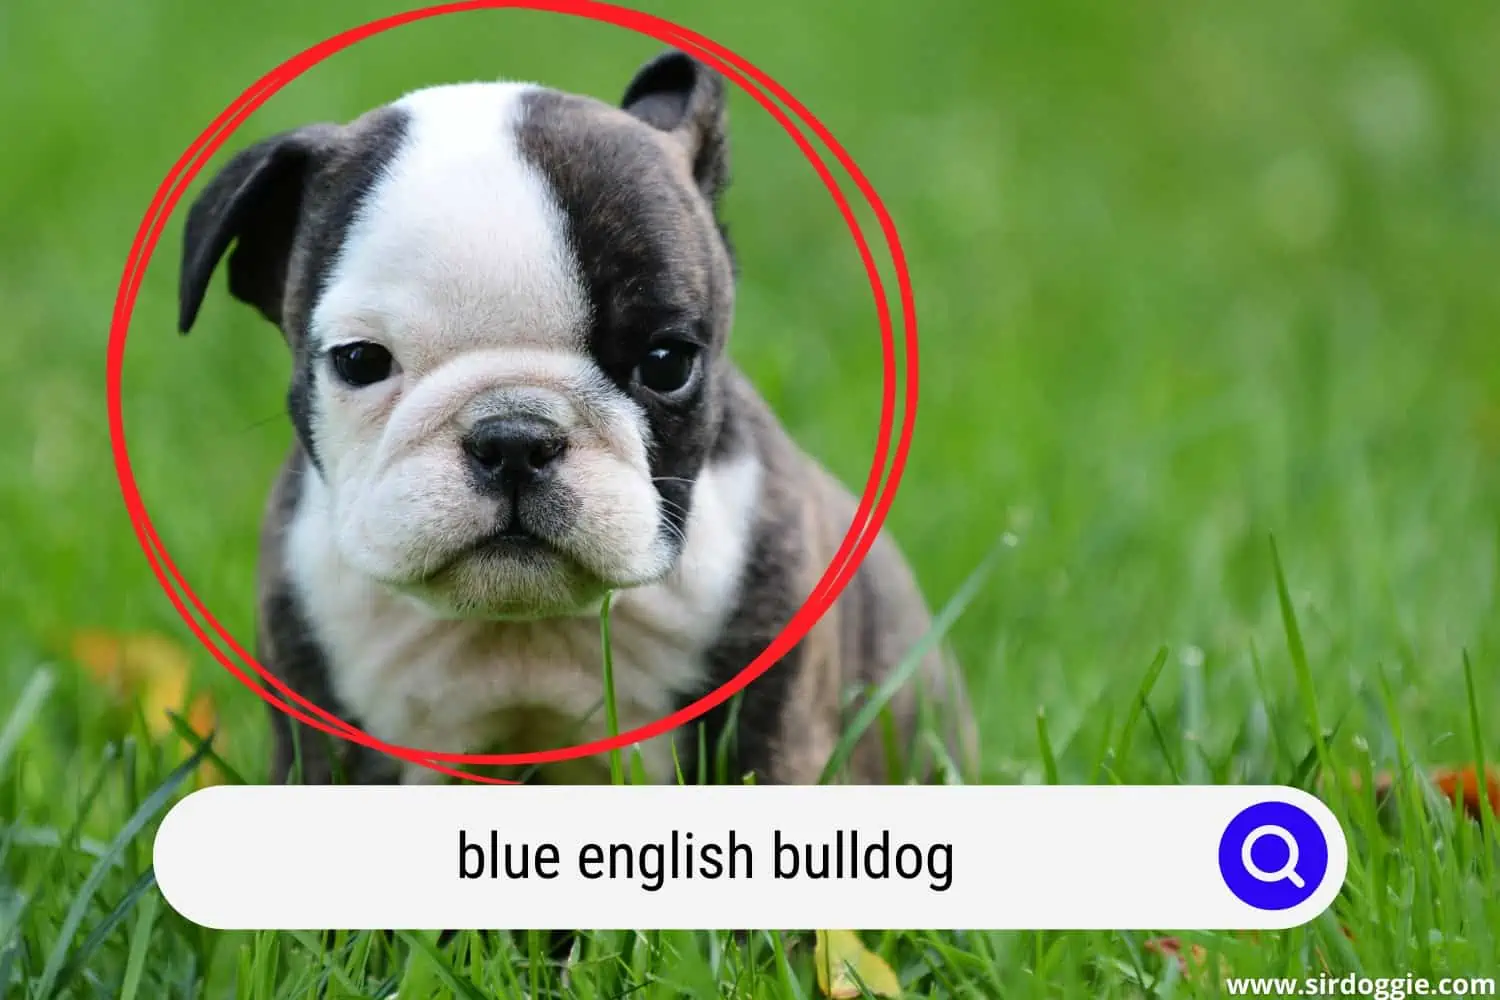 Blue English Bulldog puppy sitting on the grass